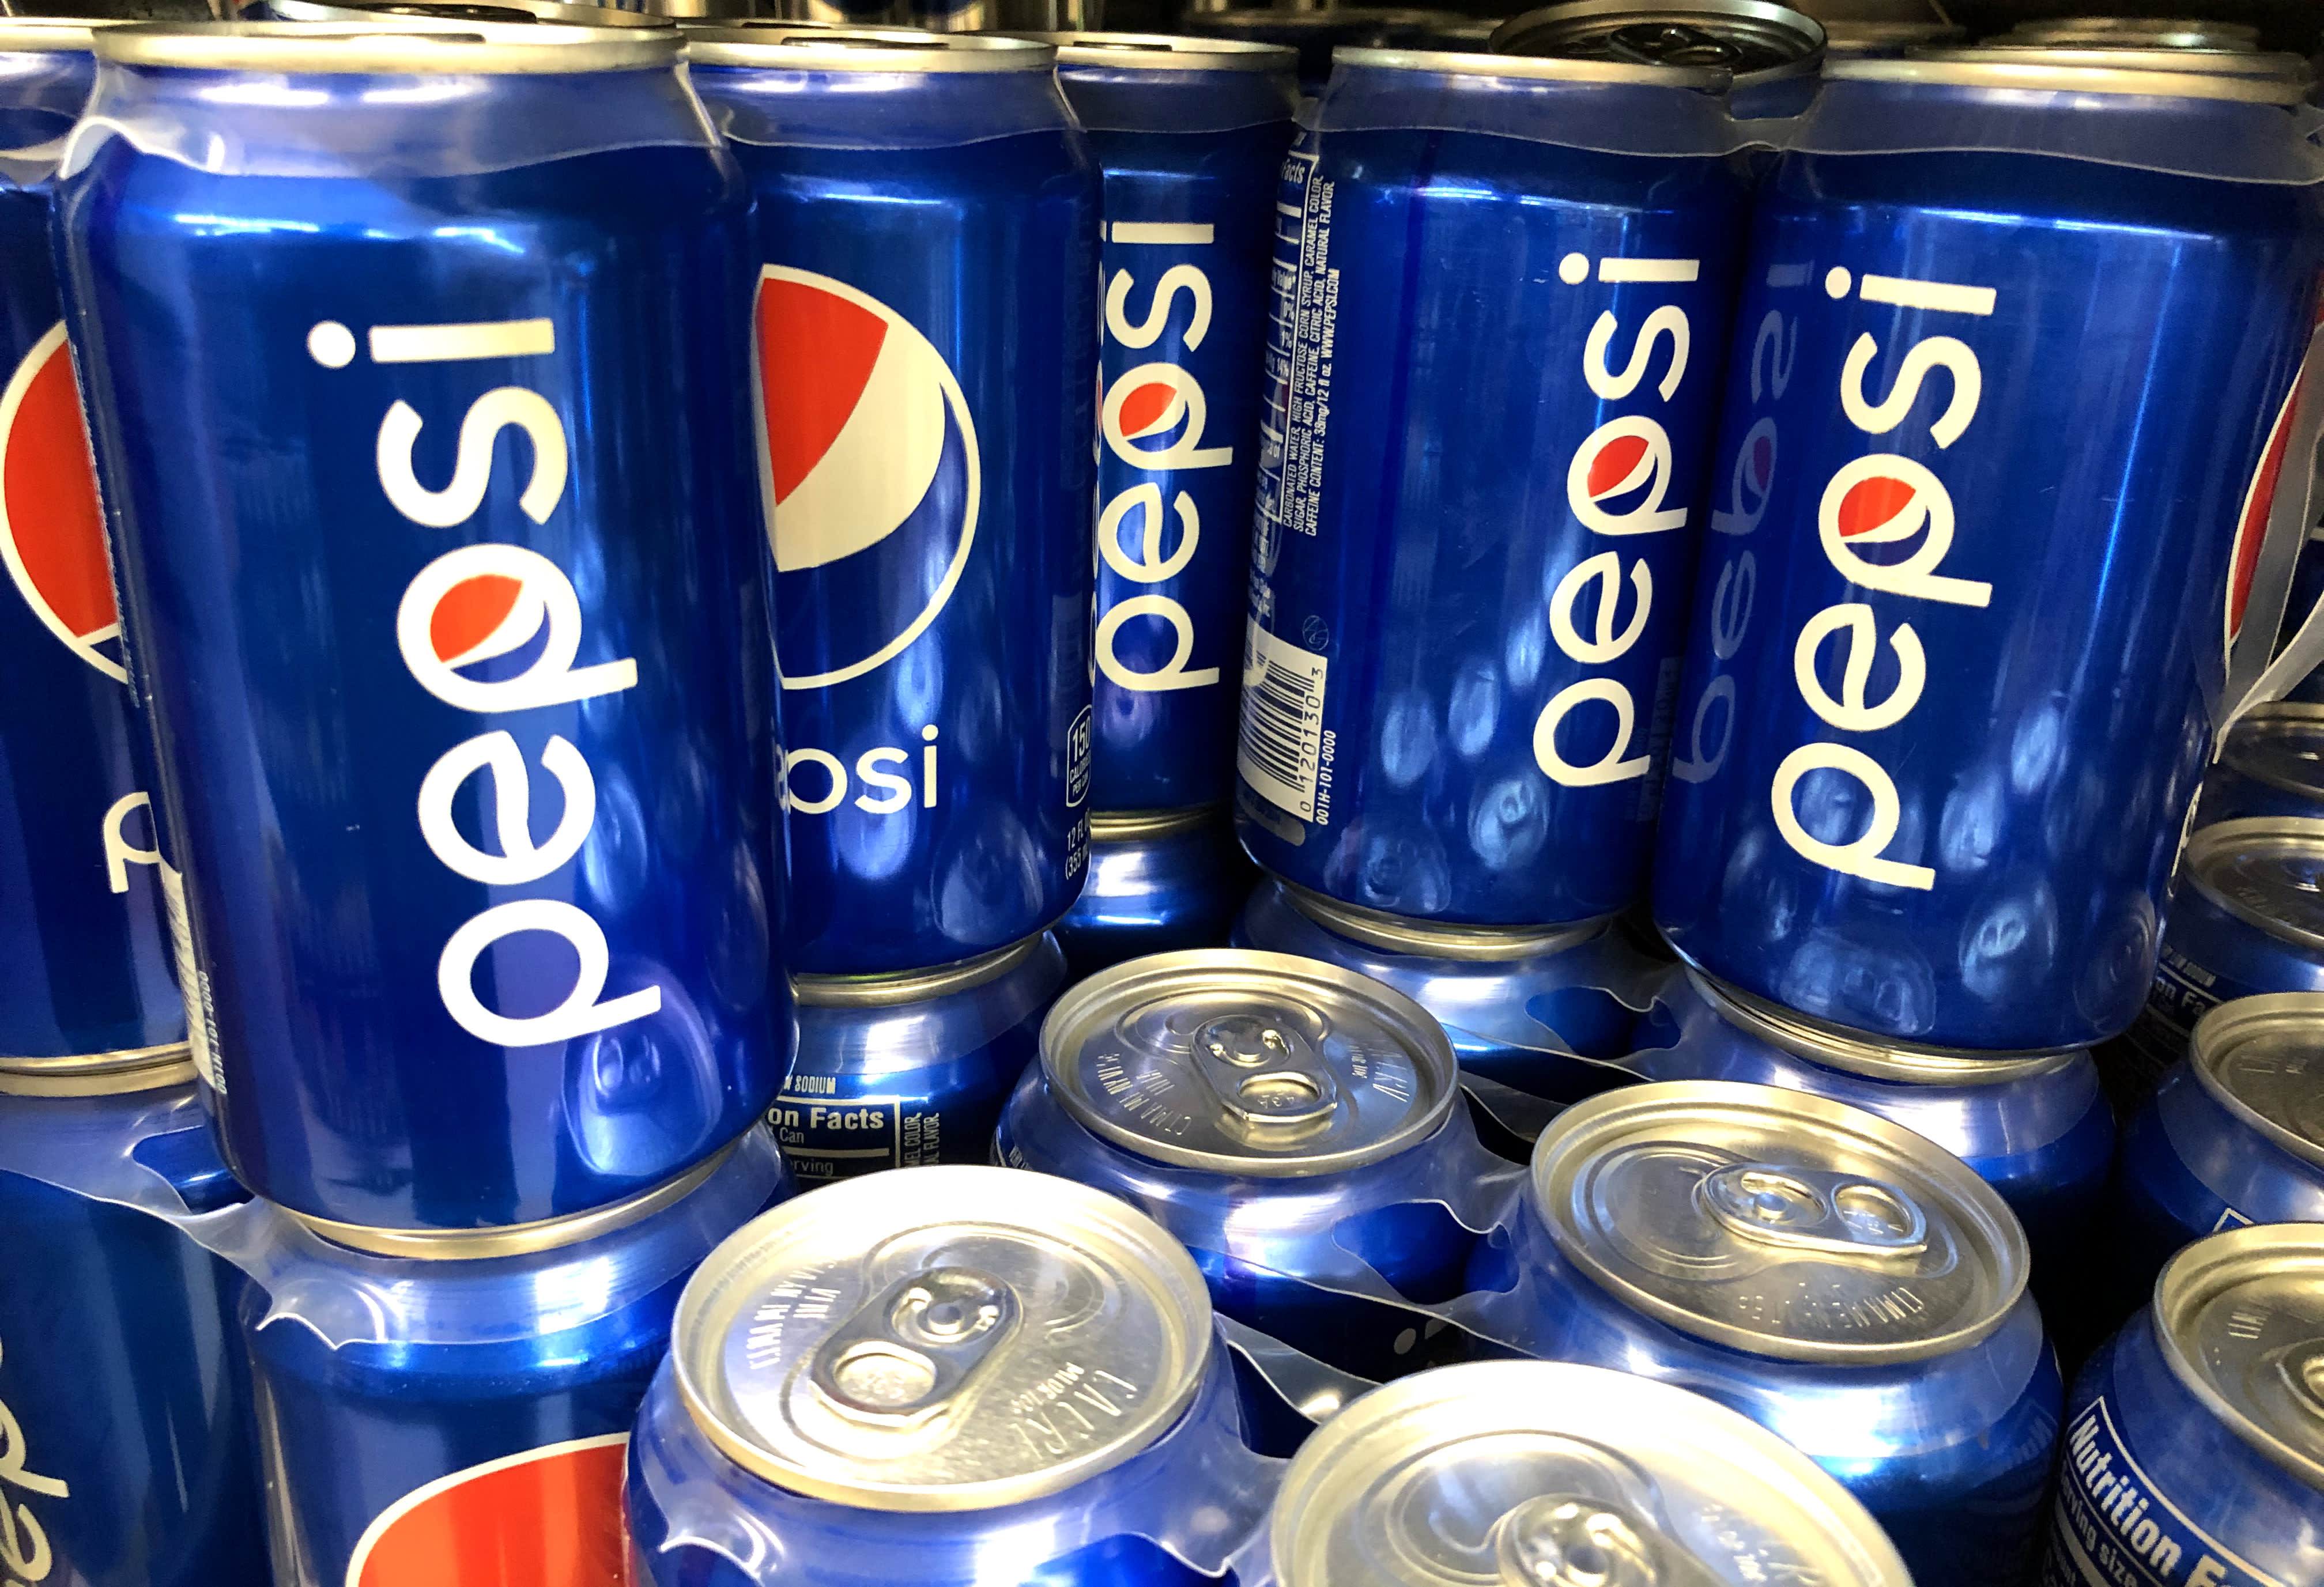 PepsiCo (PEP) Q3 2021 earnings beat